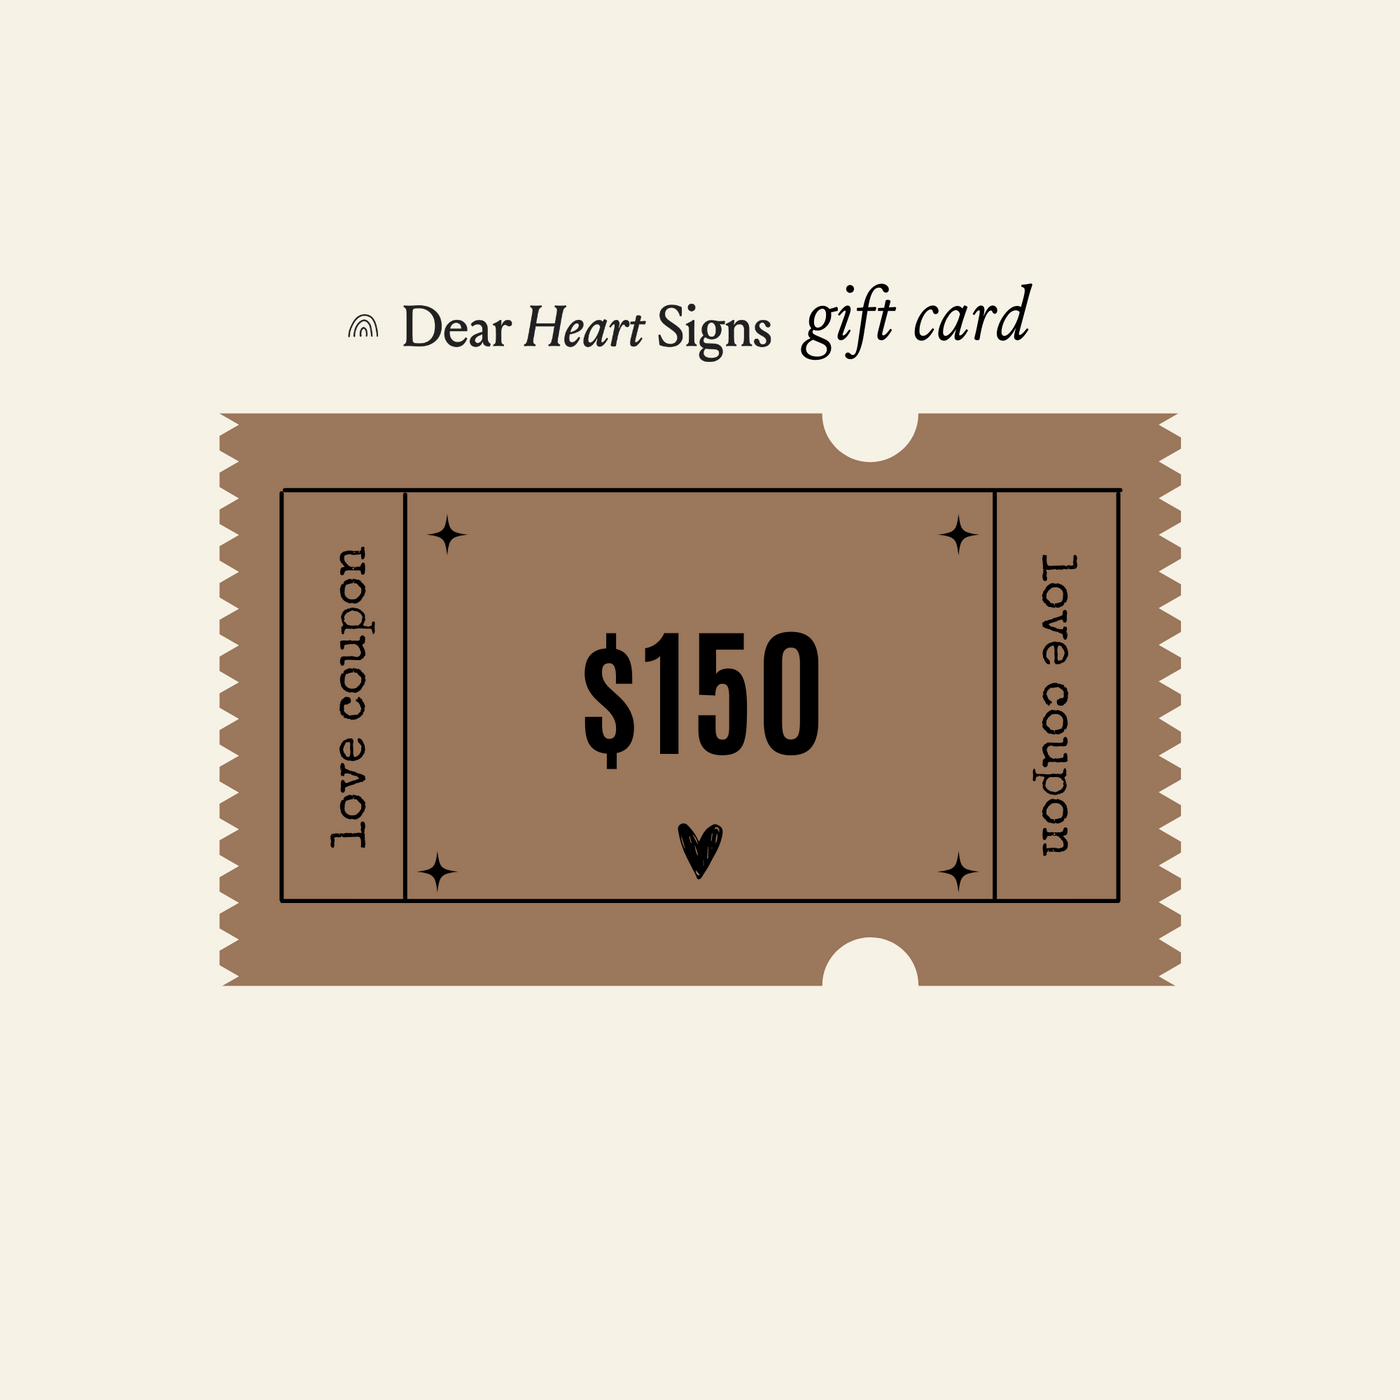 Dear Heart Signs Gift Card